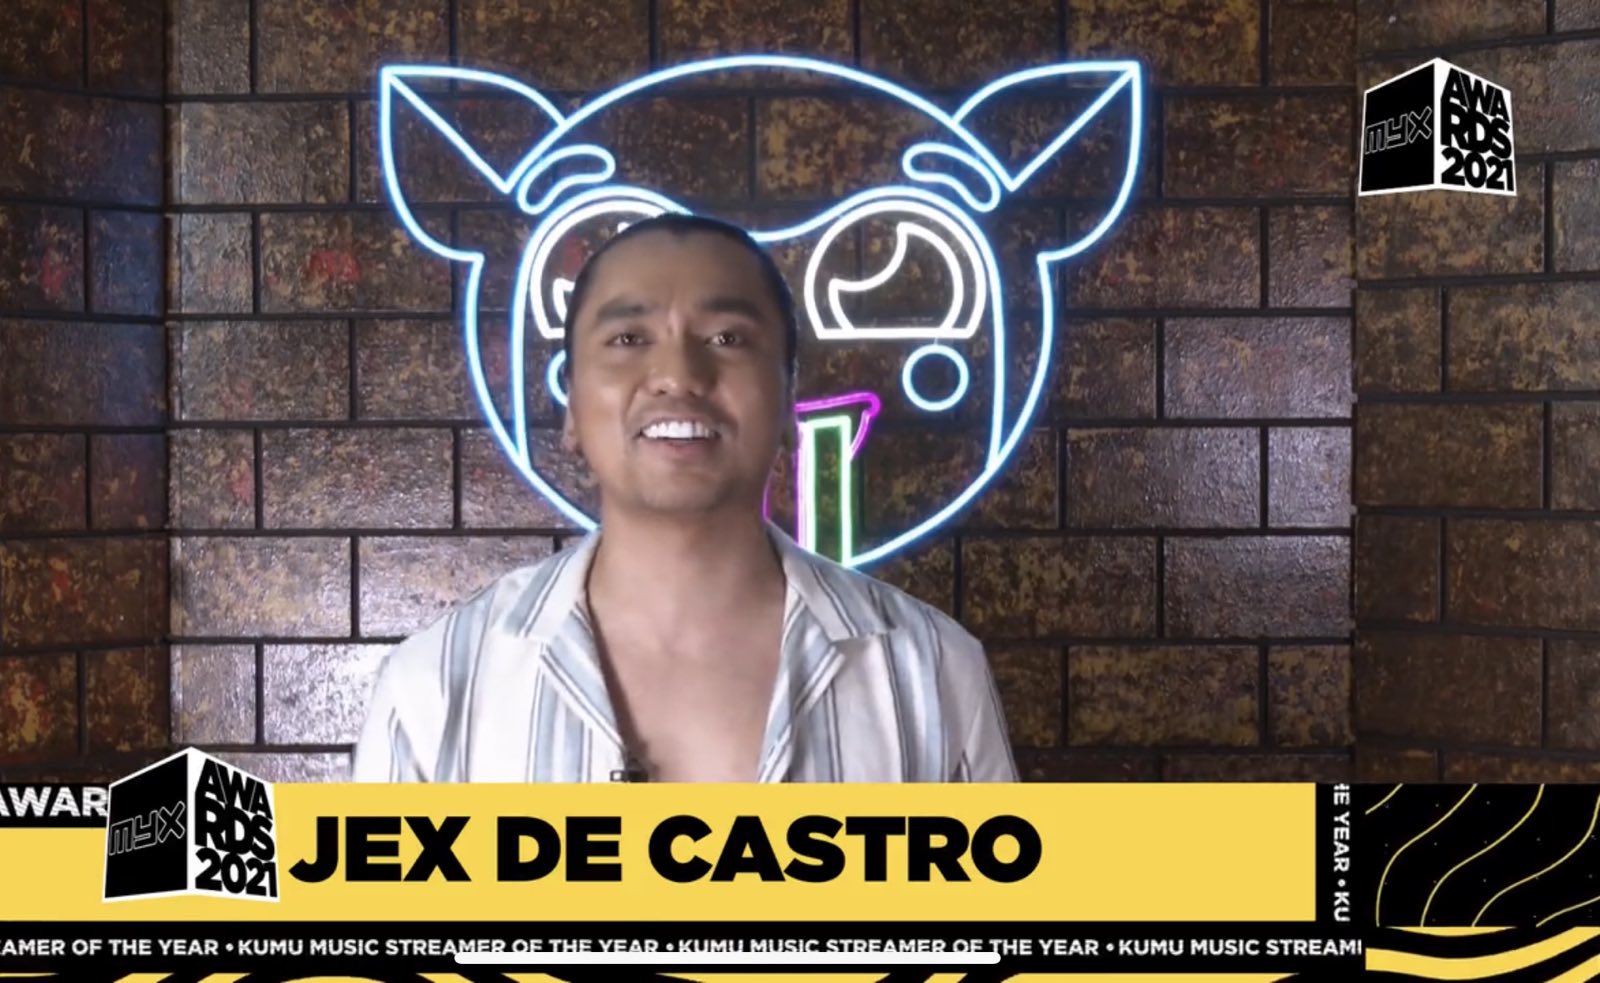 Kumu Music Streamer of the Year Jex de Castro